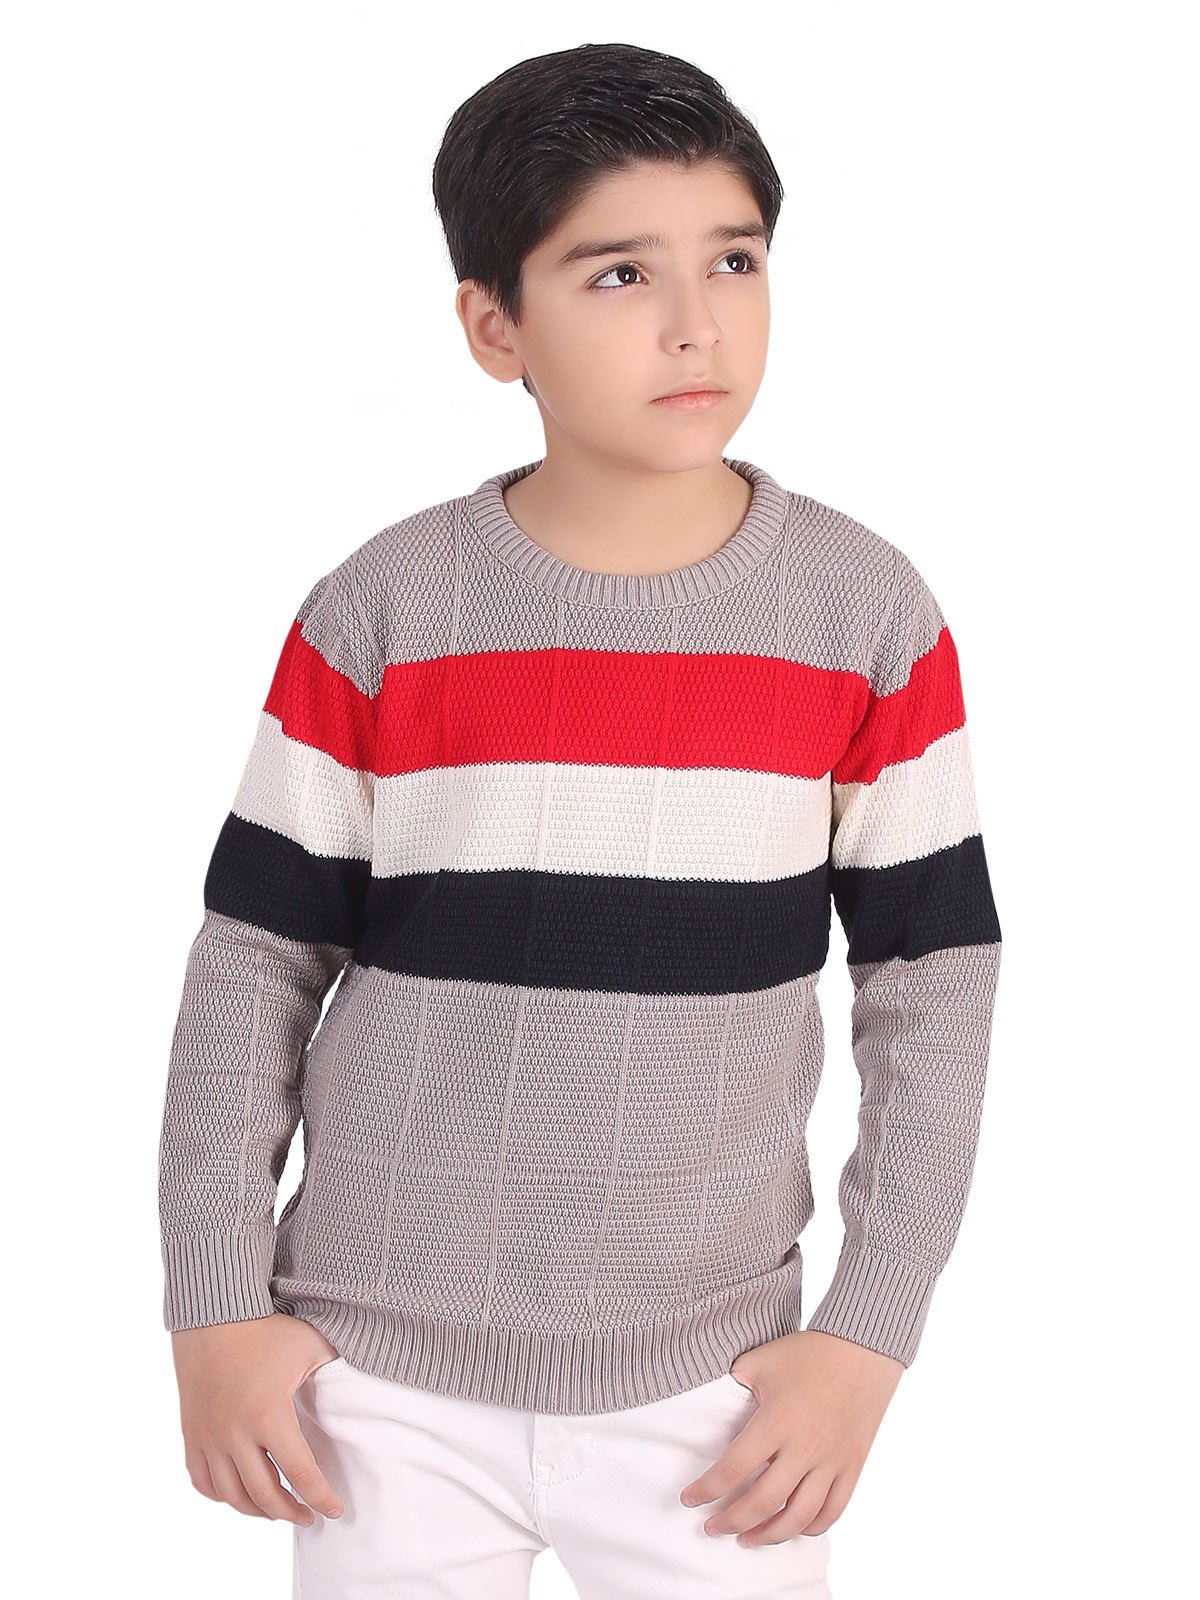 Boy's Grey Sweater - EBTSWT19-019